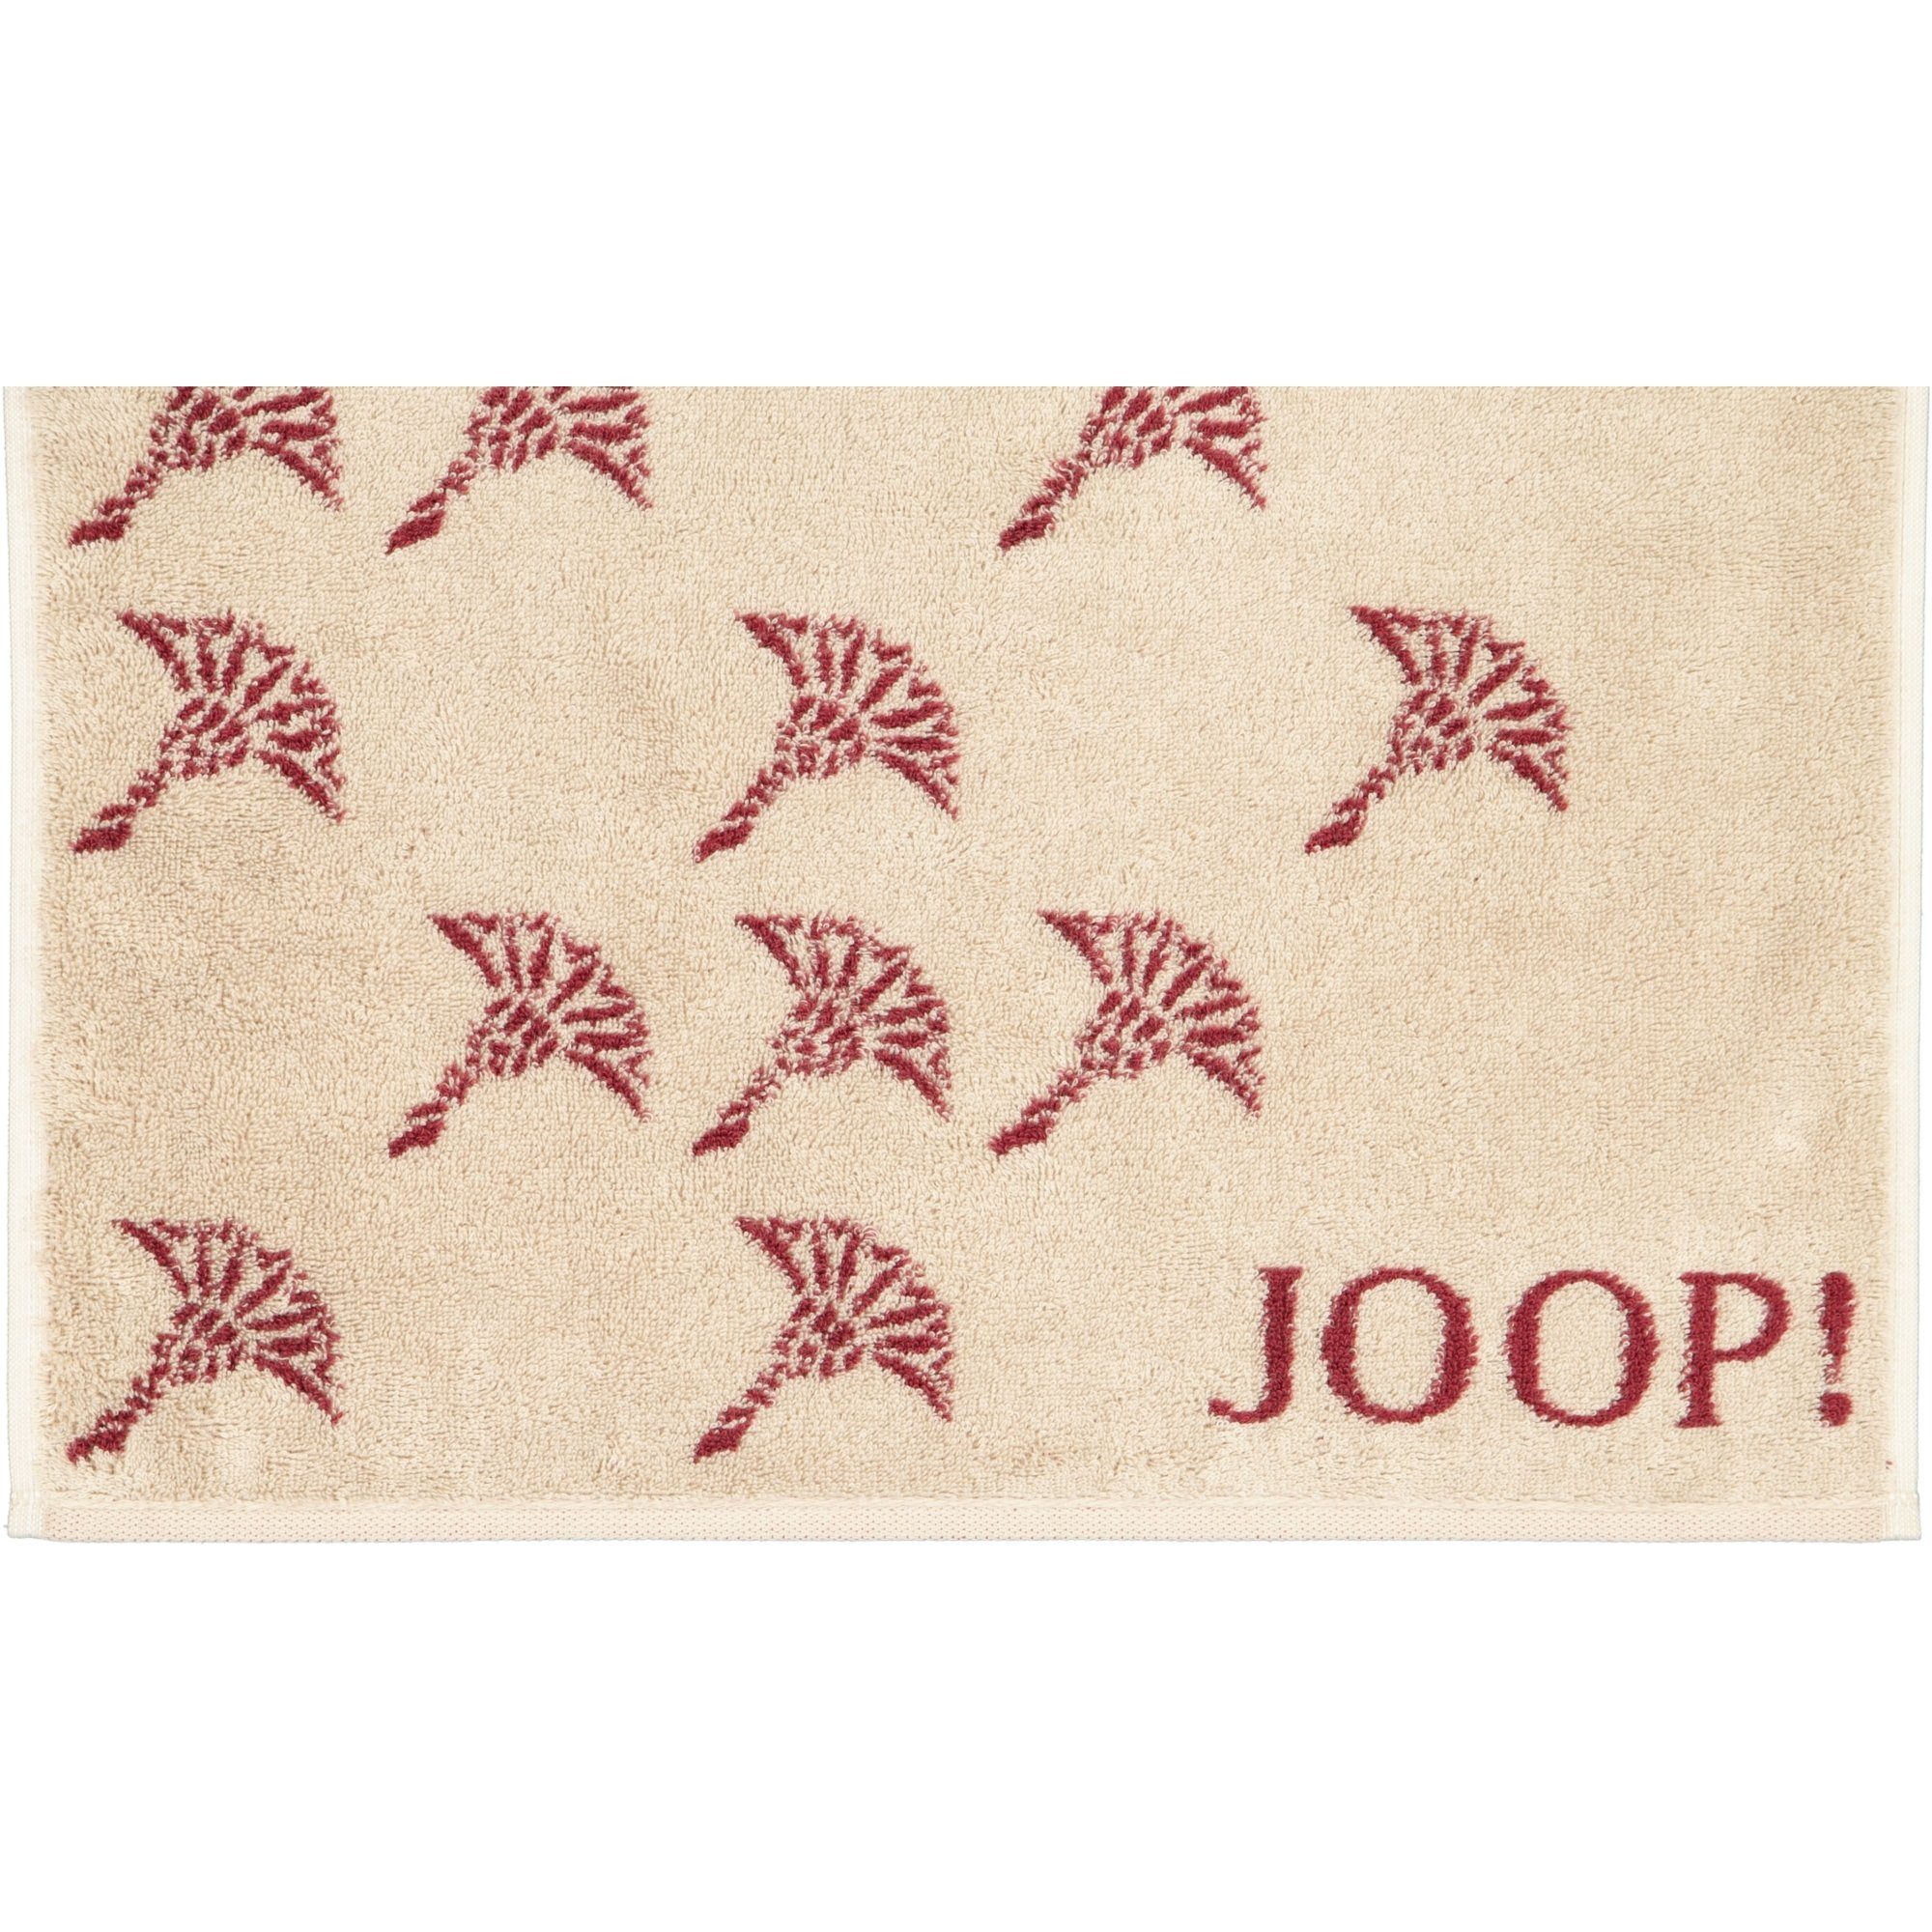 Joop! Handtücher Baumwolle Select 100% 1693, Cornflower rouge